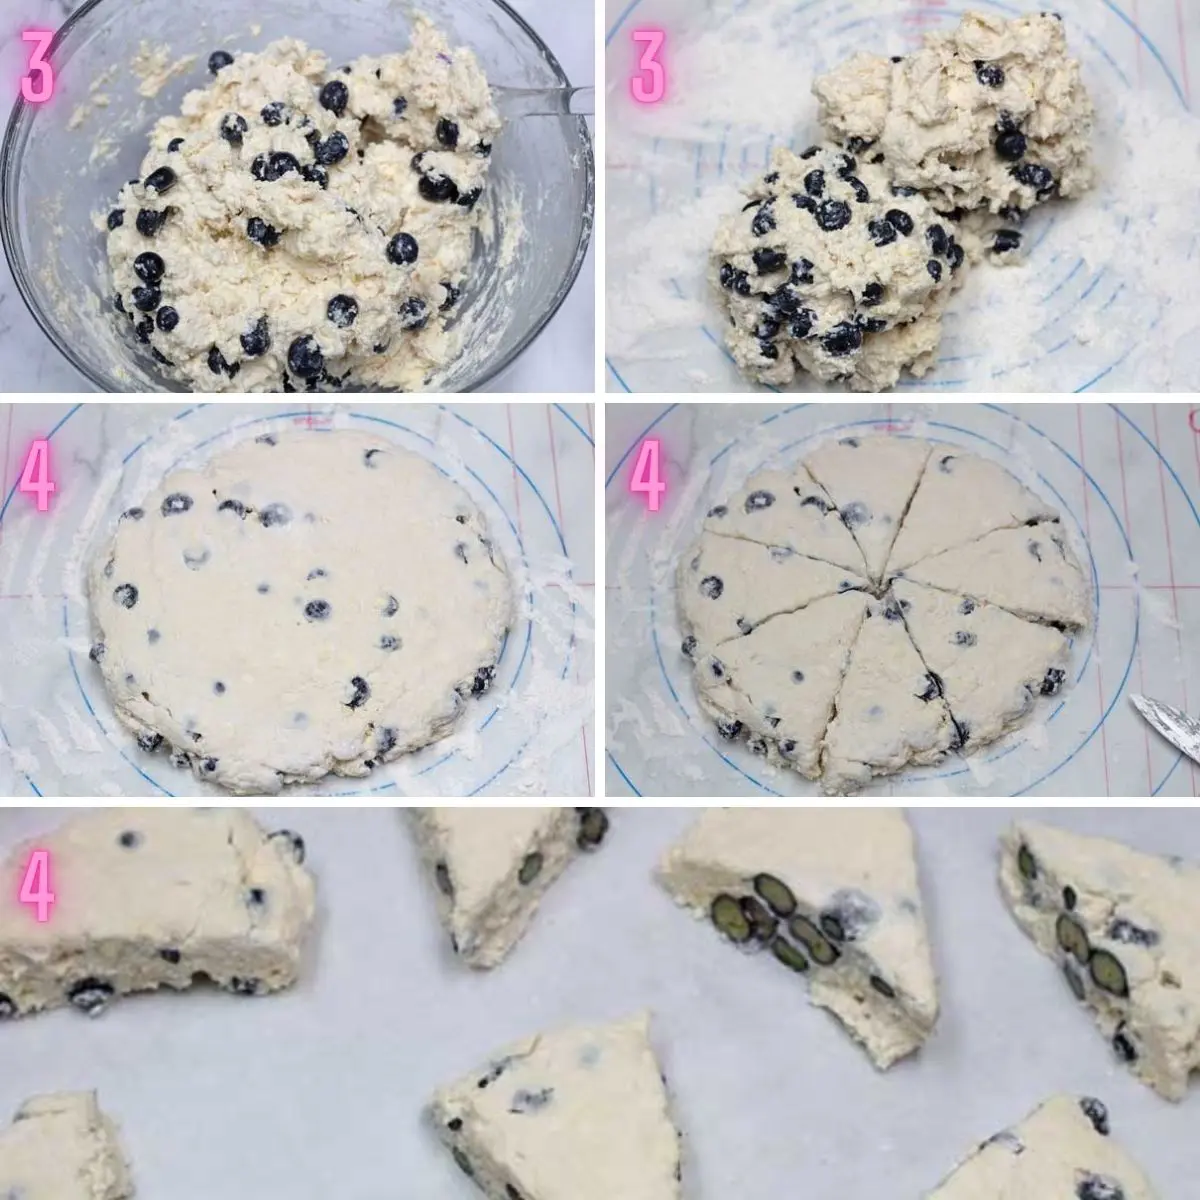 Blue cream cheese sconesprocess sequence 2.